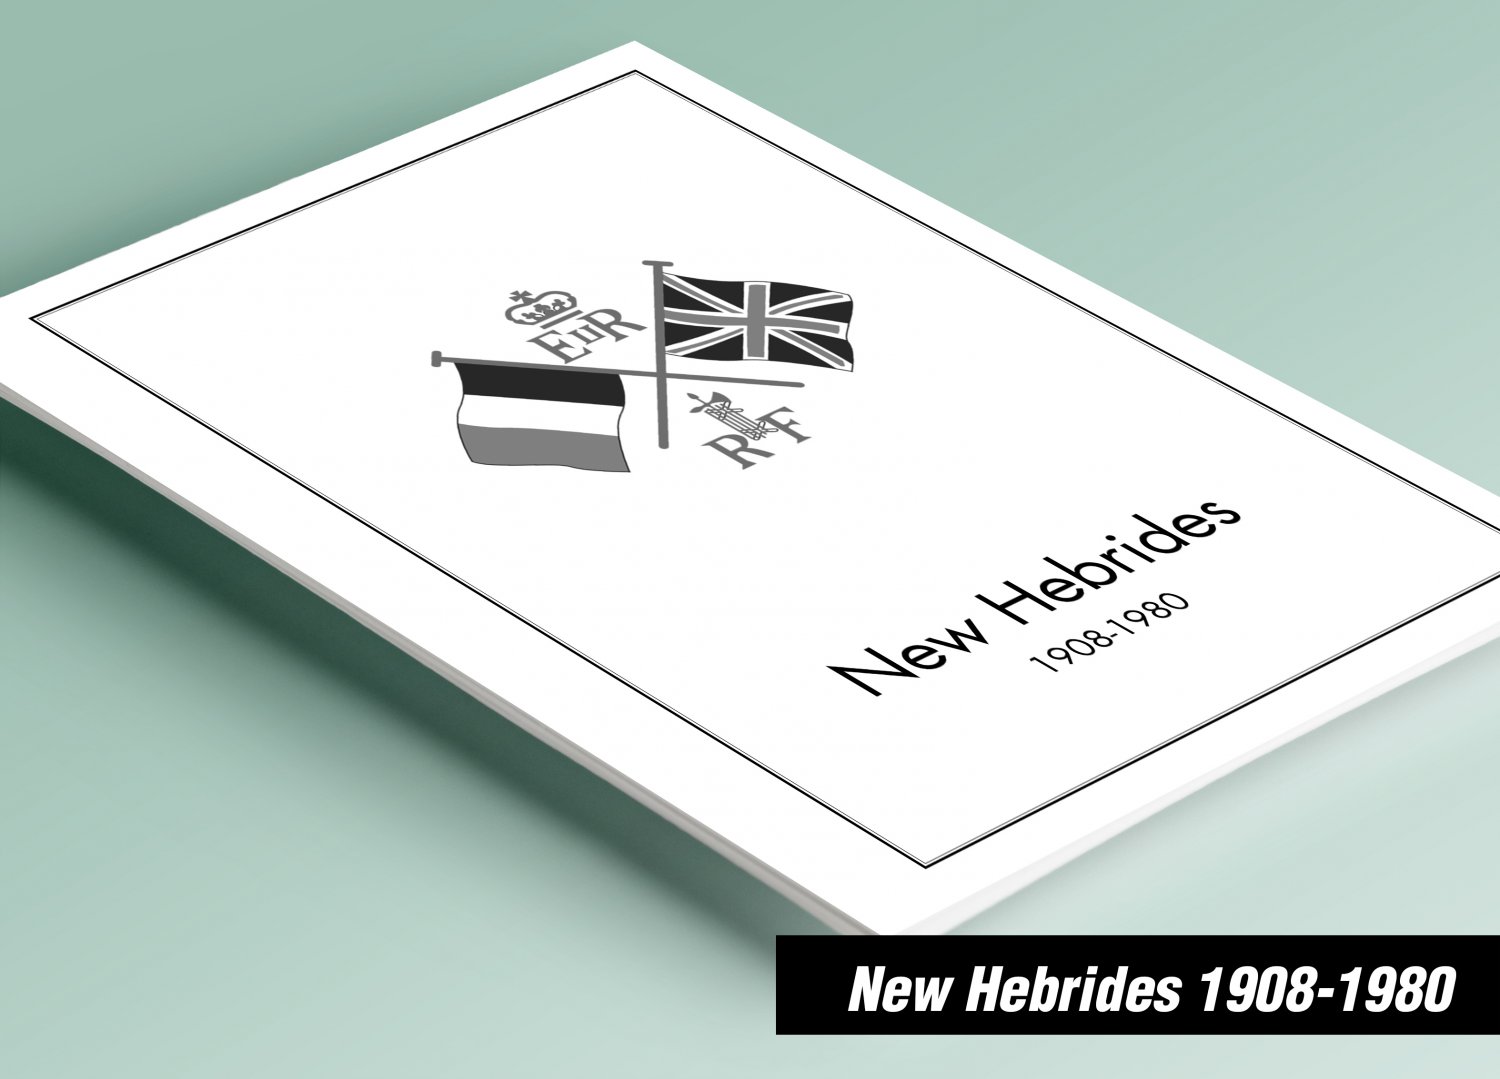 PRINTED NEW HEBRIDES / NOUVELLES-HÃ�BRIDES [BR + FR] 1908-1980 STAMP ALBUM PAGES (64 pages)